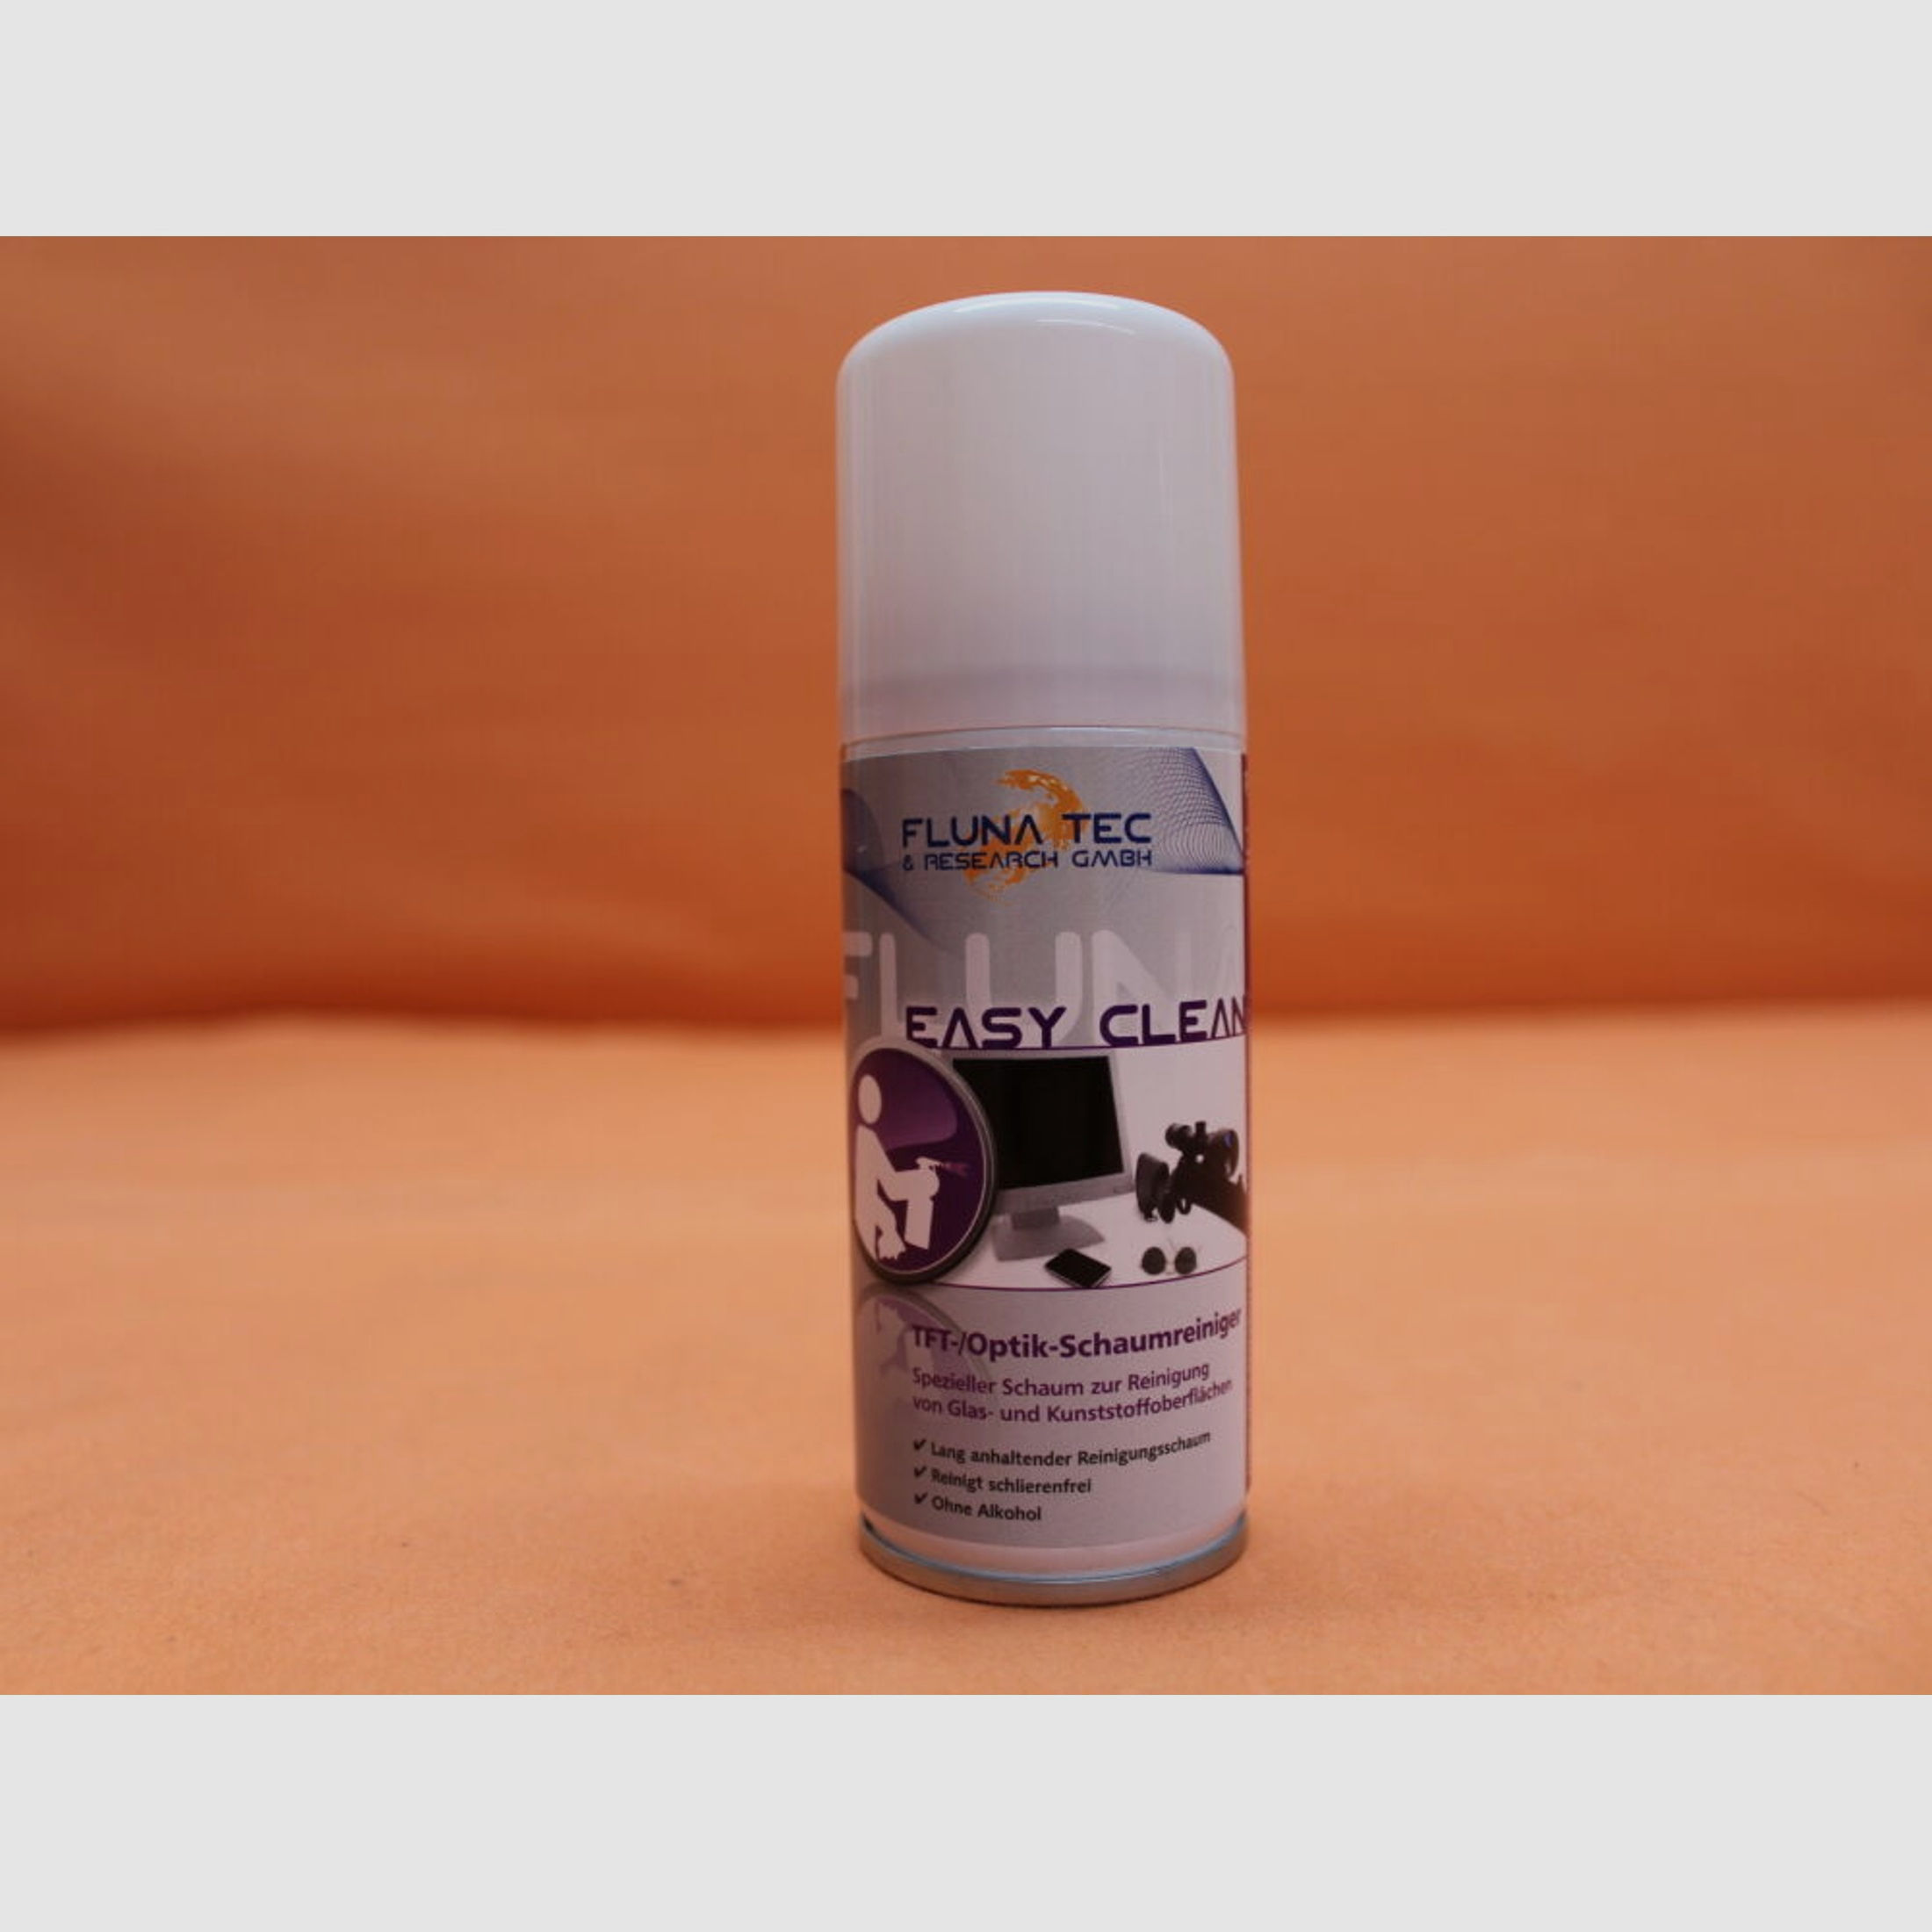 Fluna Tec	 Fluna Tec Easy Clean (100ml Spray) TFT-/ Optik-Schaumreiniger